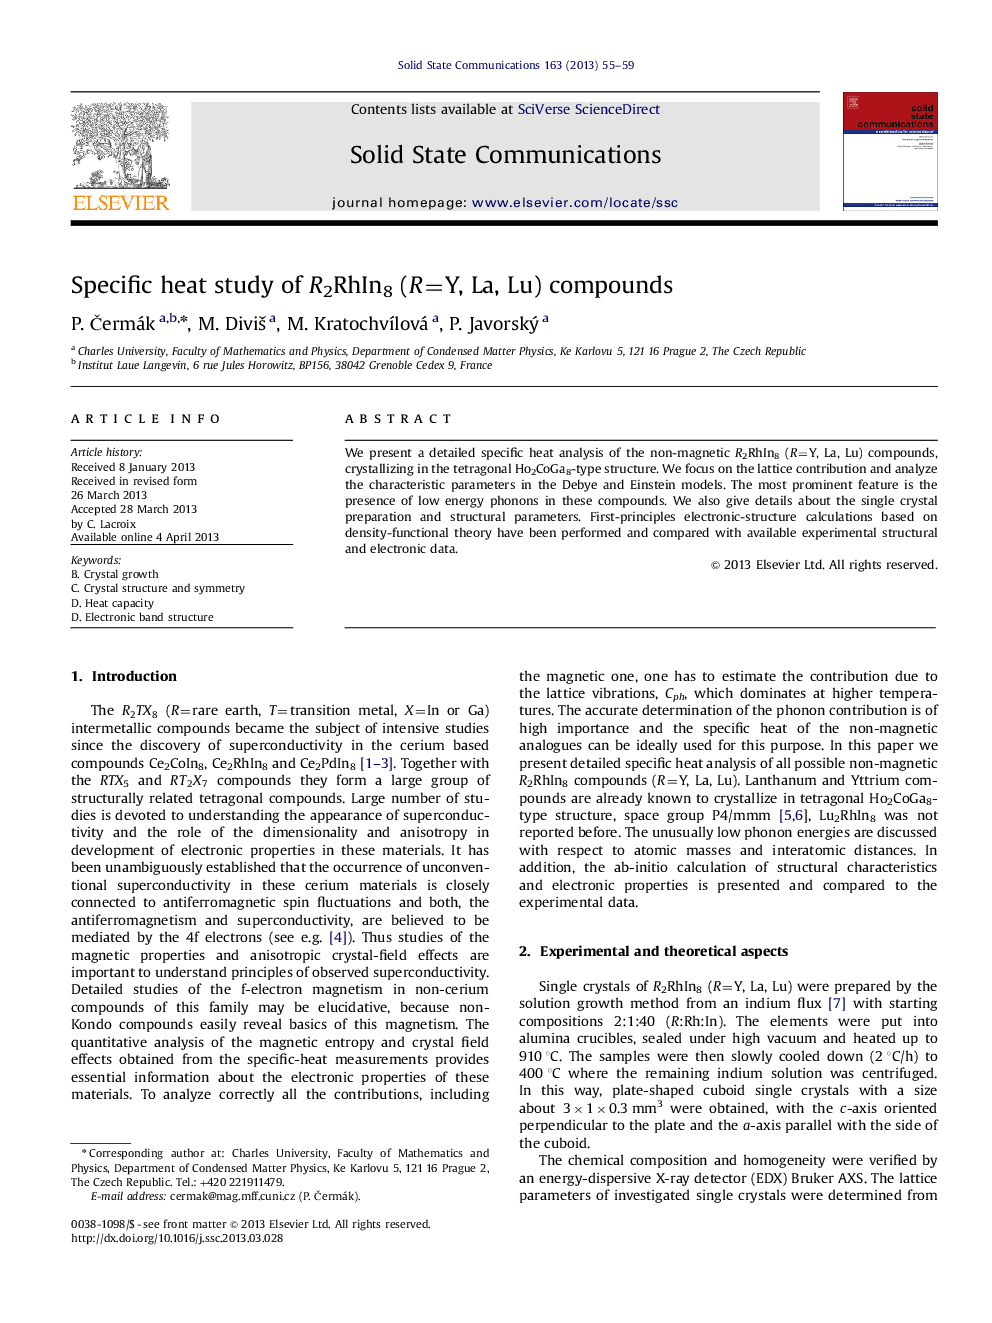 Specific heat study of R2RhIn8 (R=Y, La, Lu) compounds